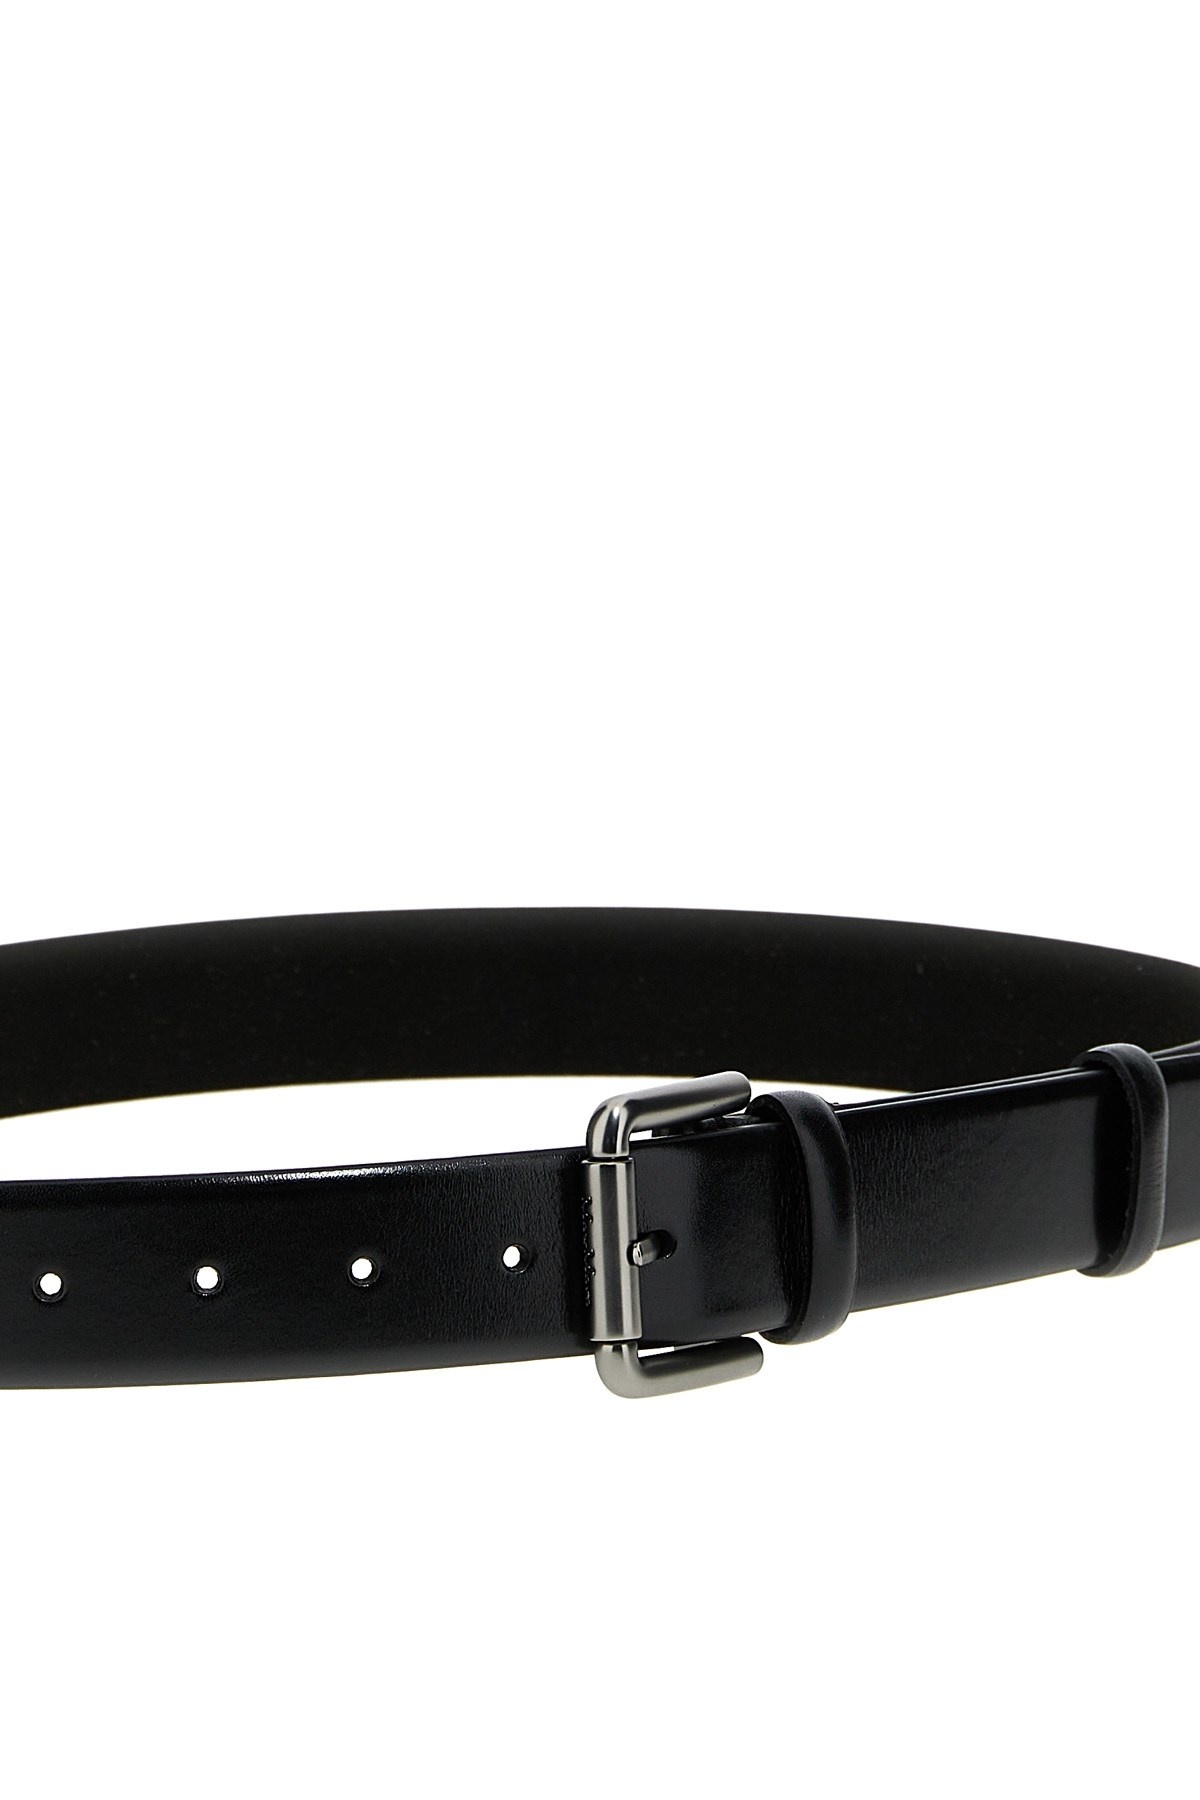 Buffered leather belt - 3